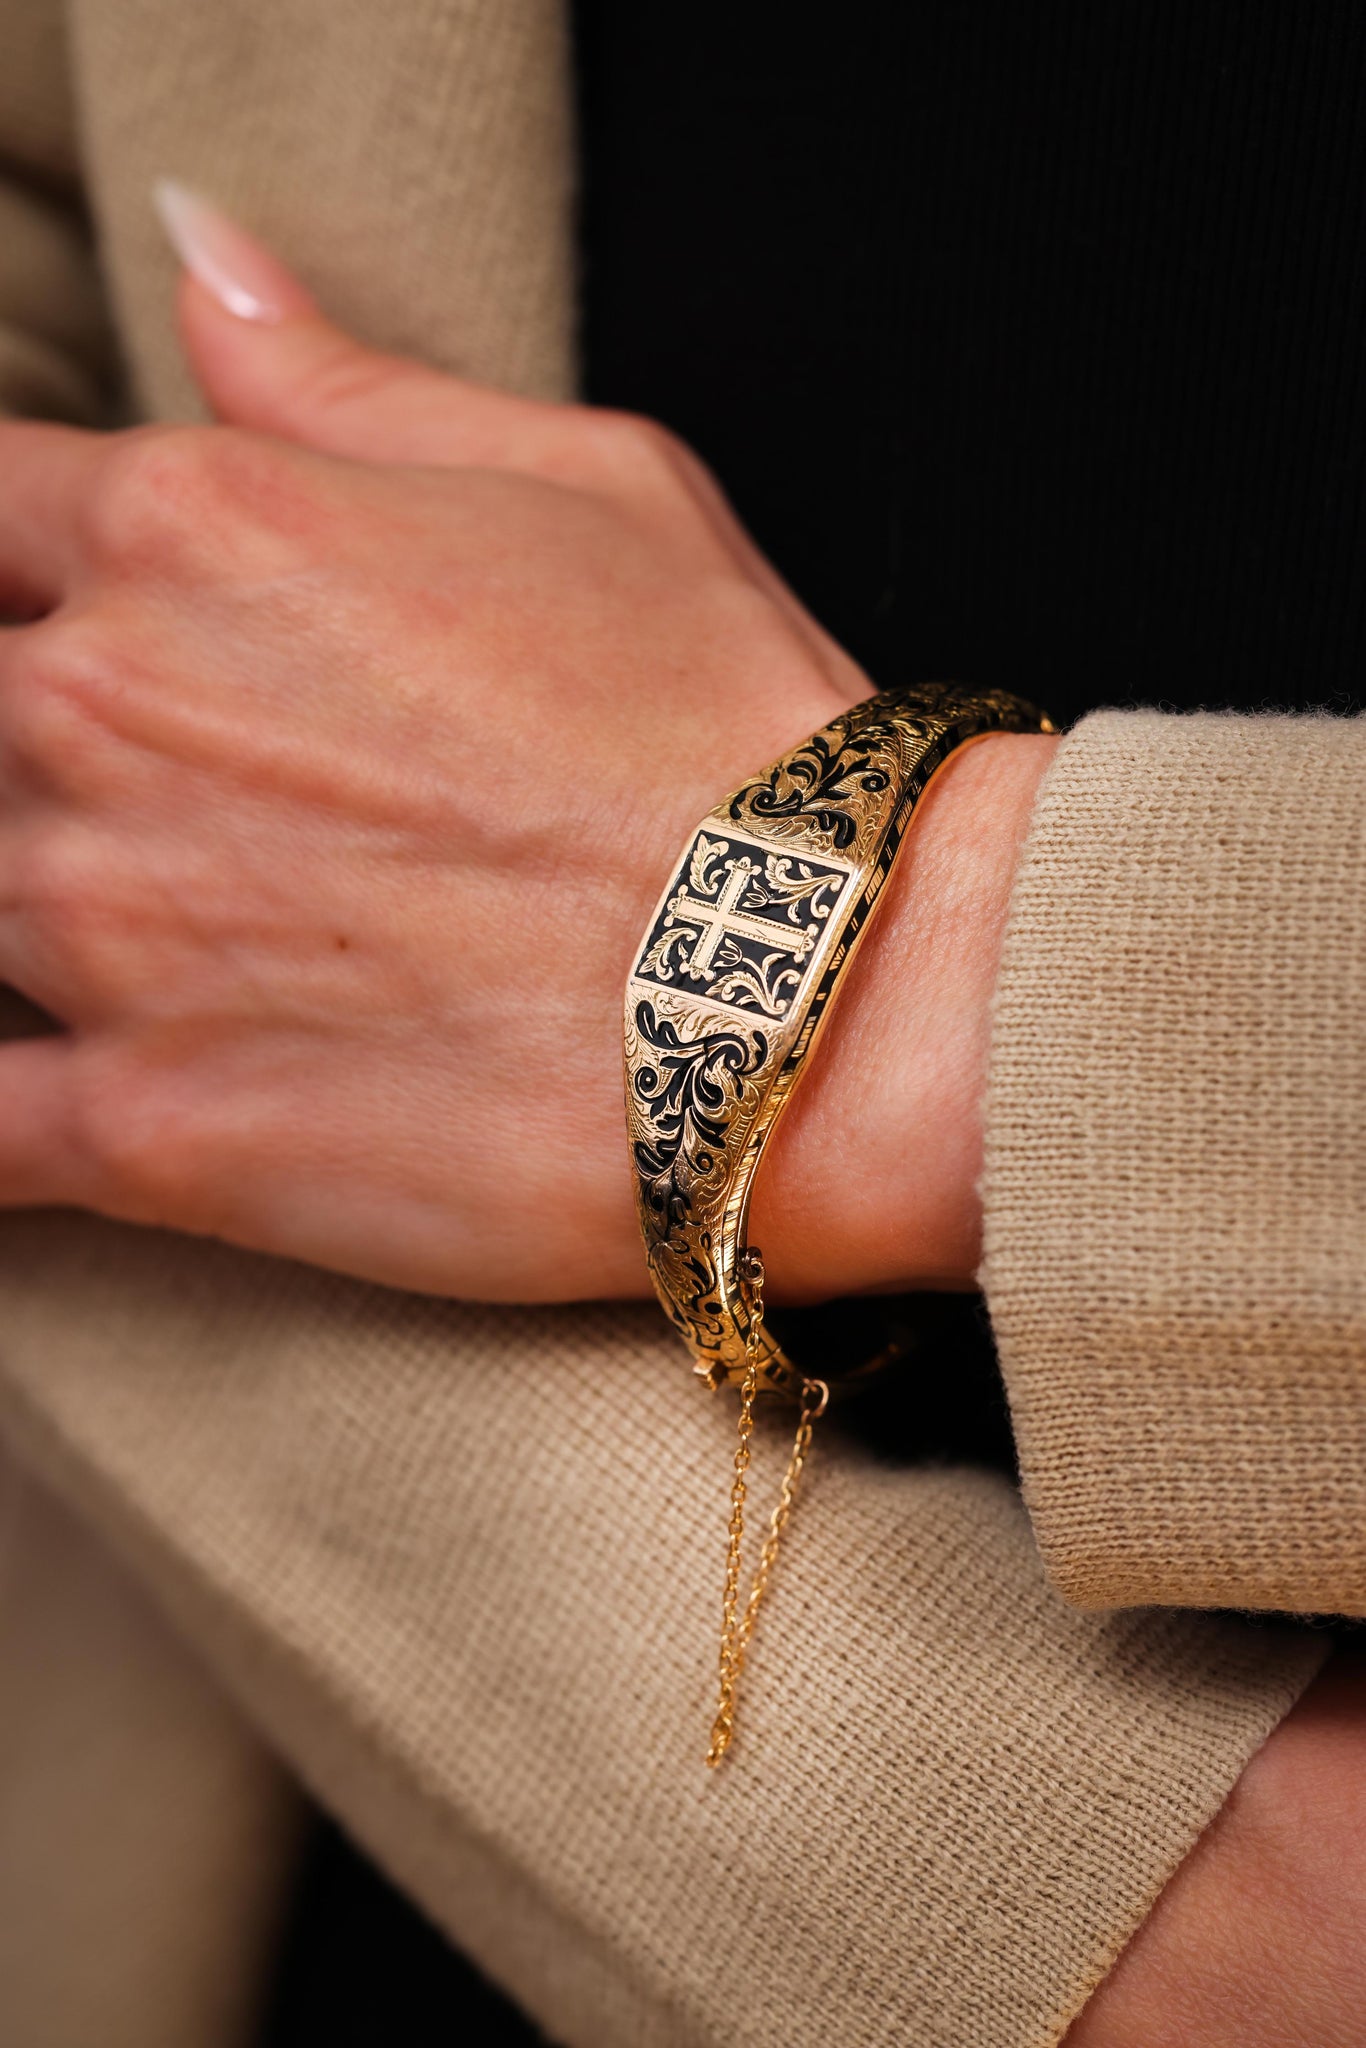 Victorian Enamel Gold Bracelet